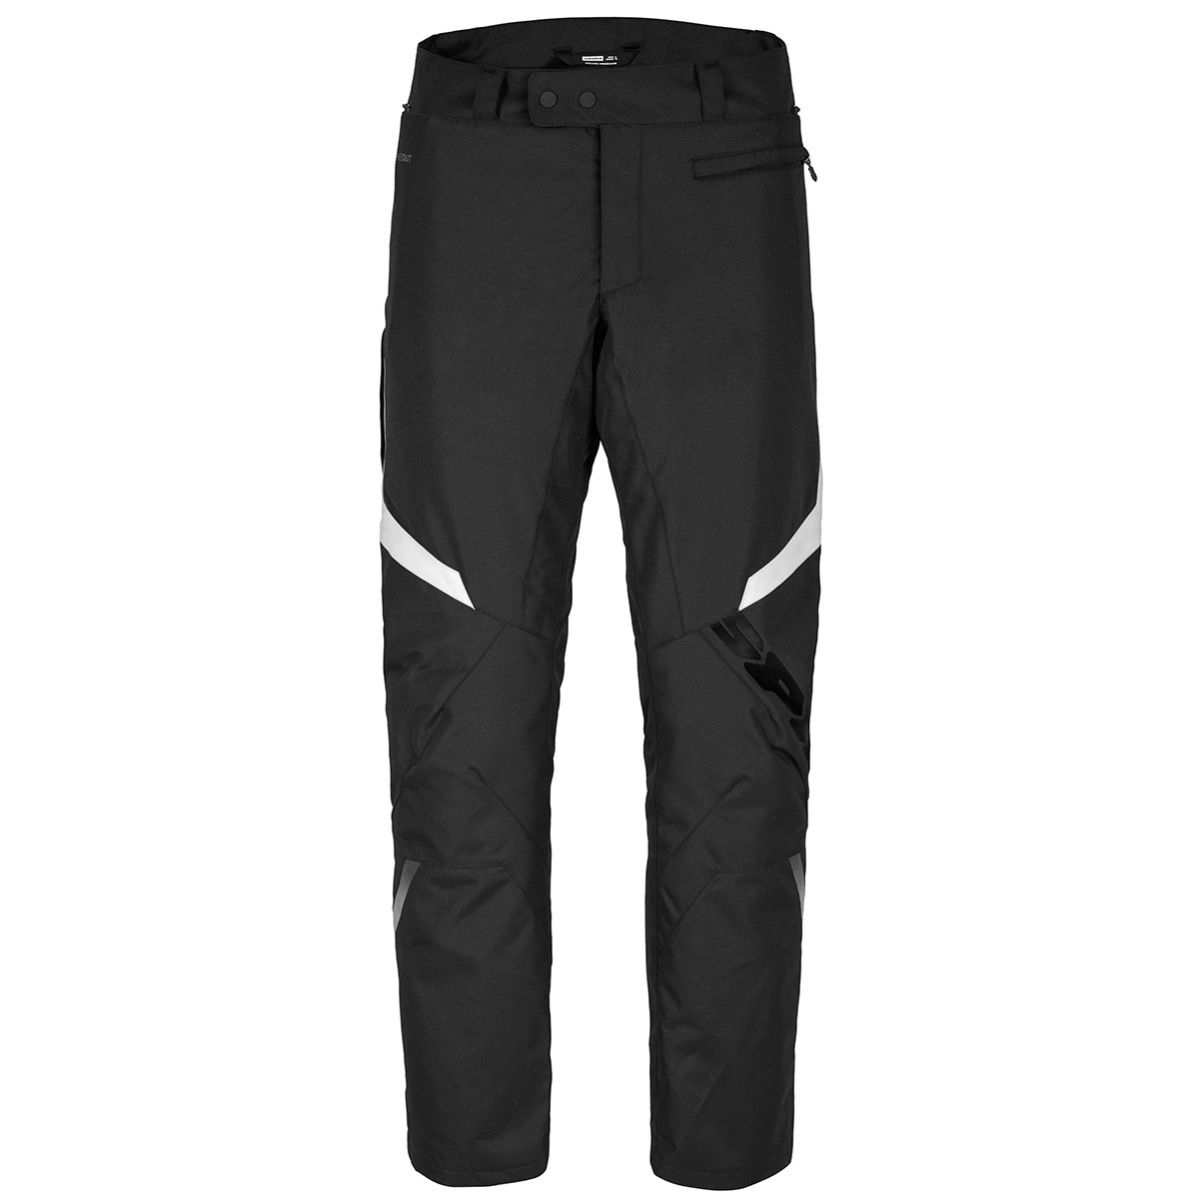 Image of Spidi Sportmaster Pants Black White Size 2XL ID 8030161478150